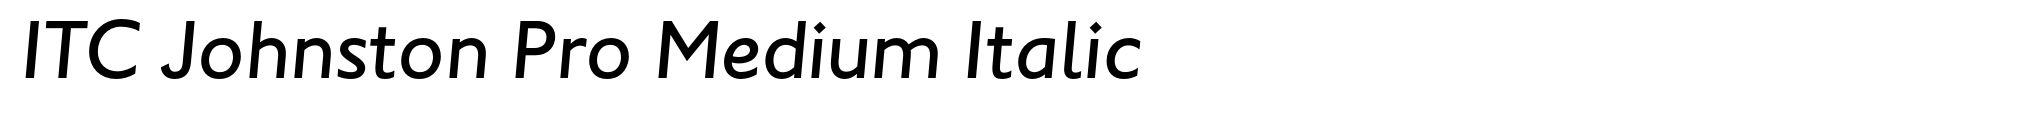 ITC Johnston Pro Medium Italic image